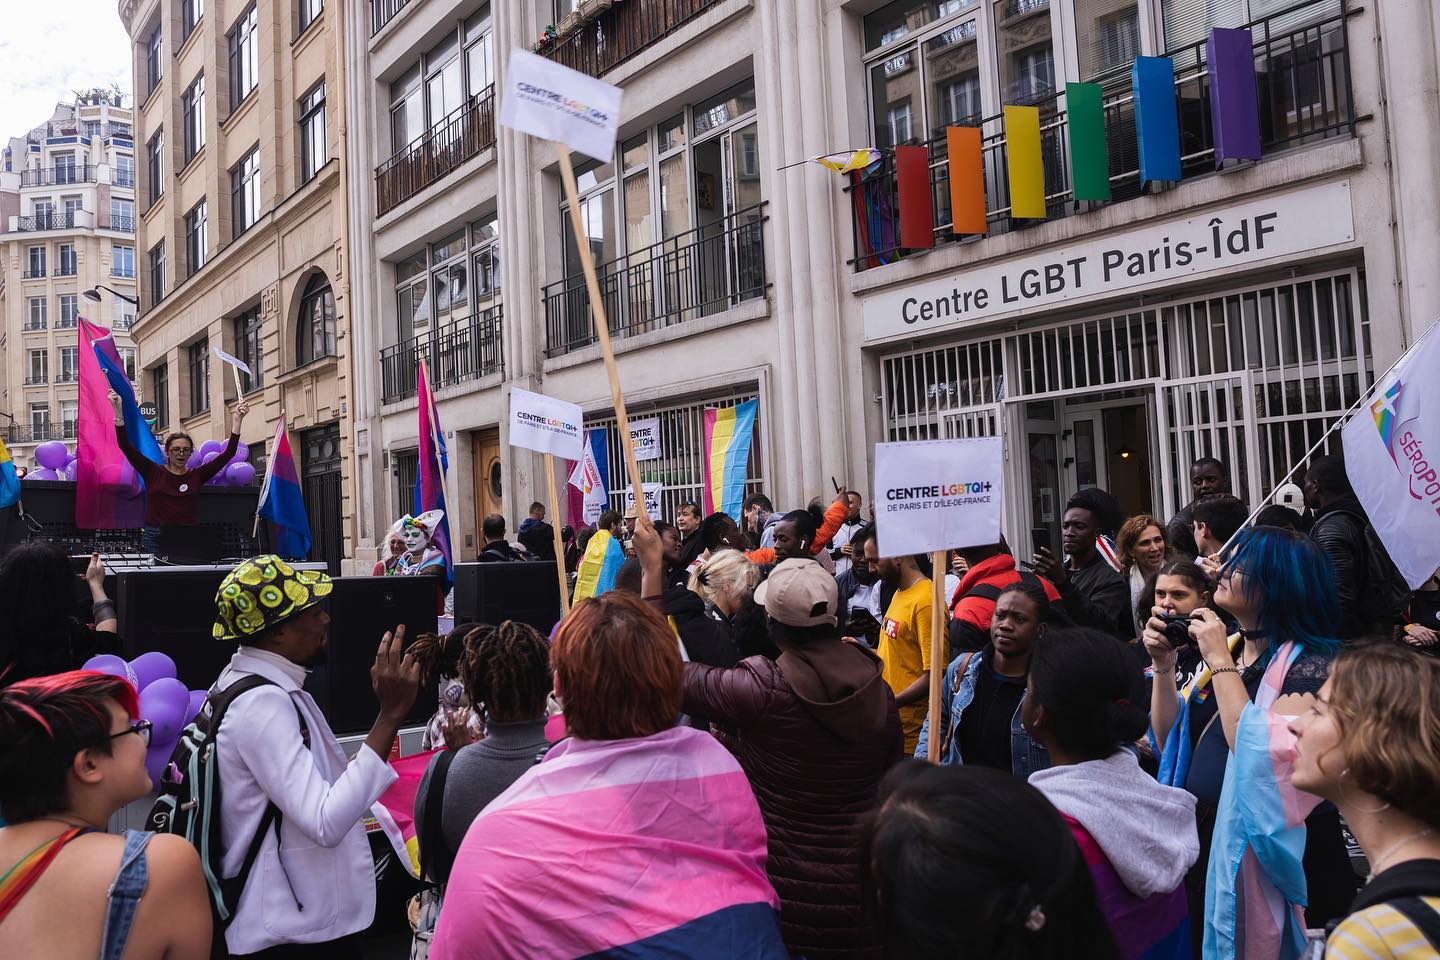 Pusat LGBT Paris